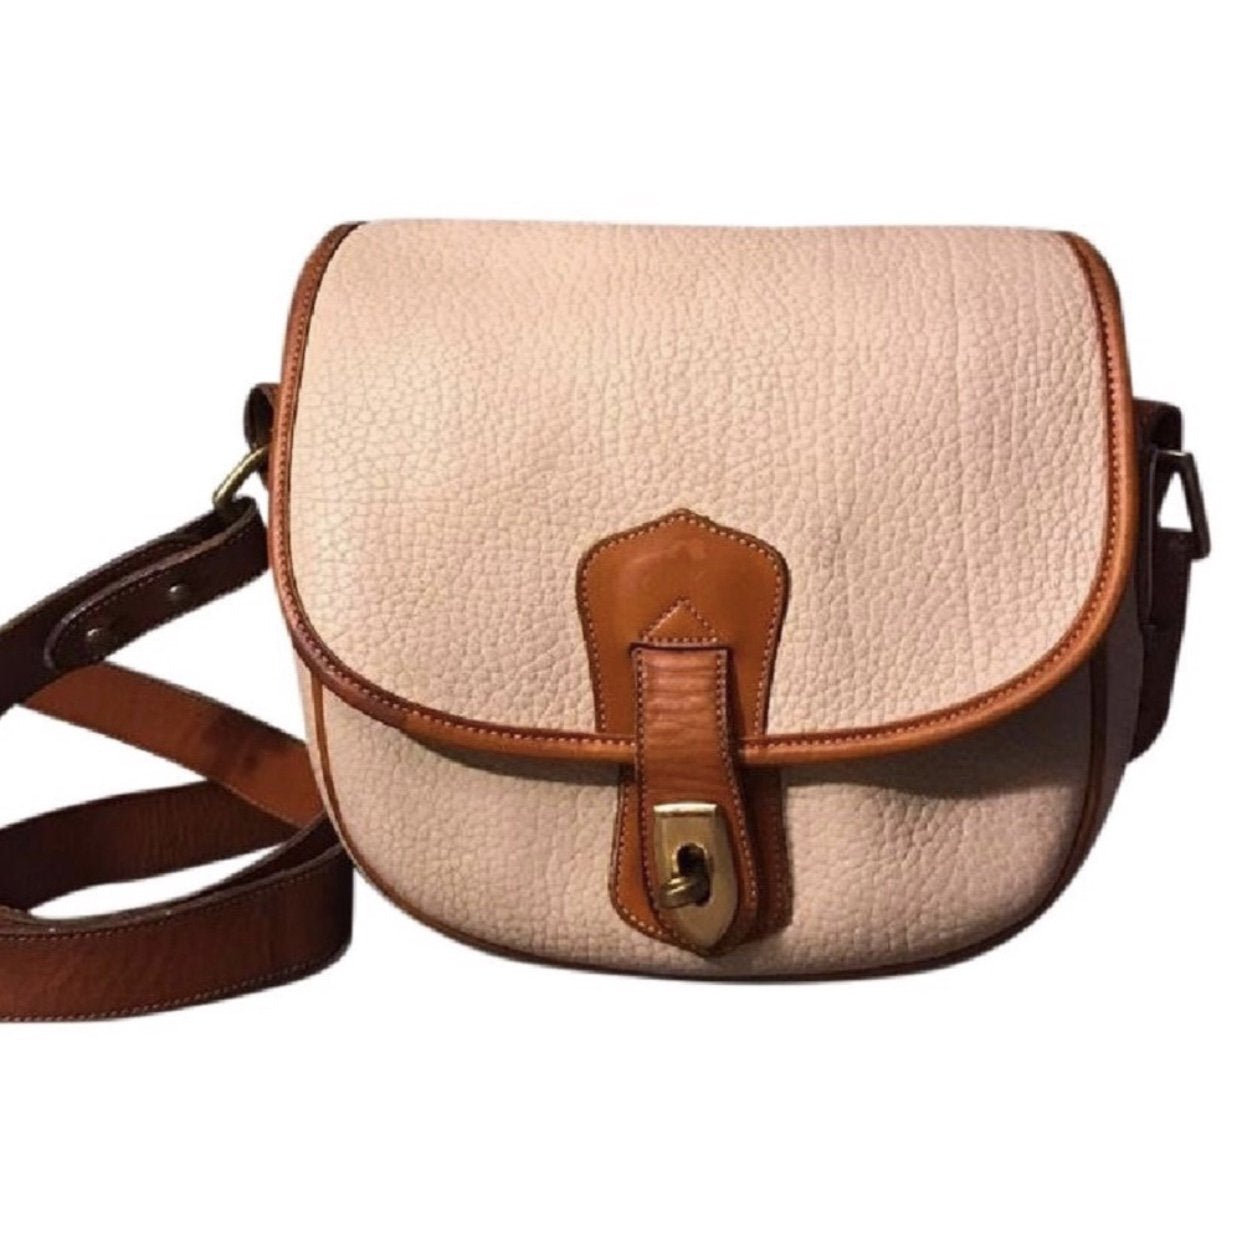 Sold at Auction: Vintage DOONEY BOURKE Crossbody Purse Handbag